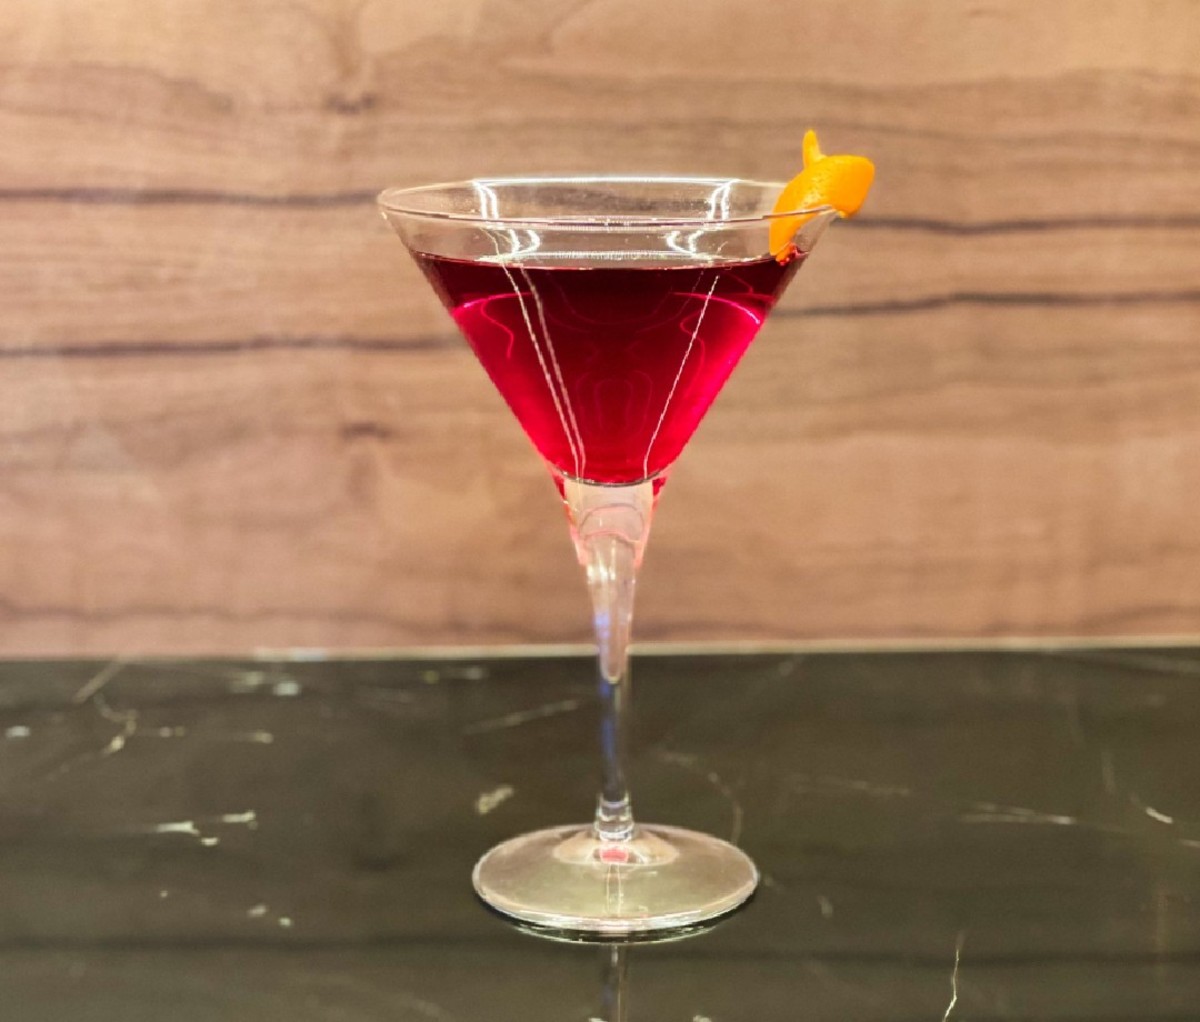 Reddish-colored yuzu martini with an orange twist garnish